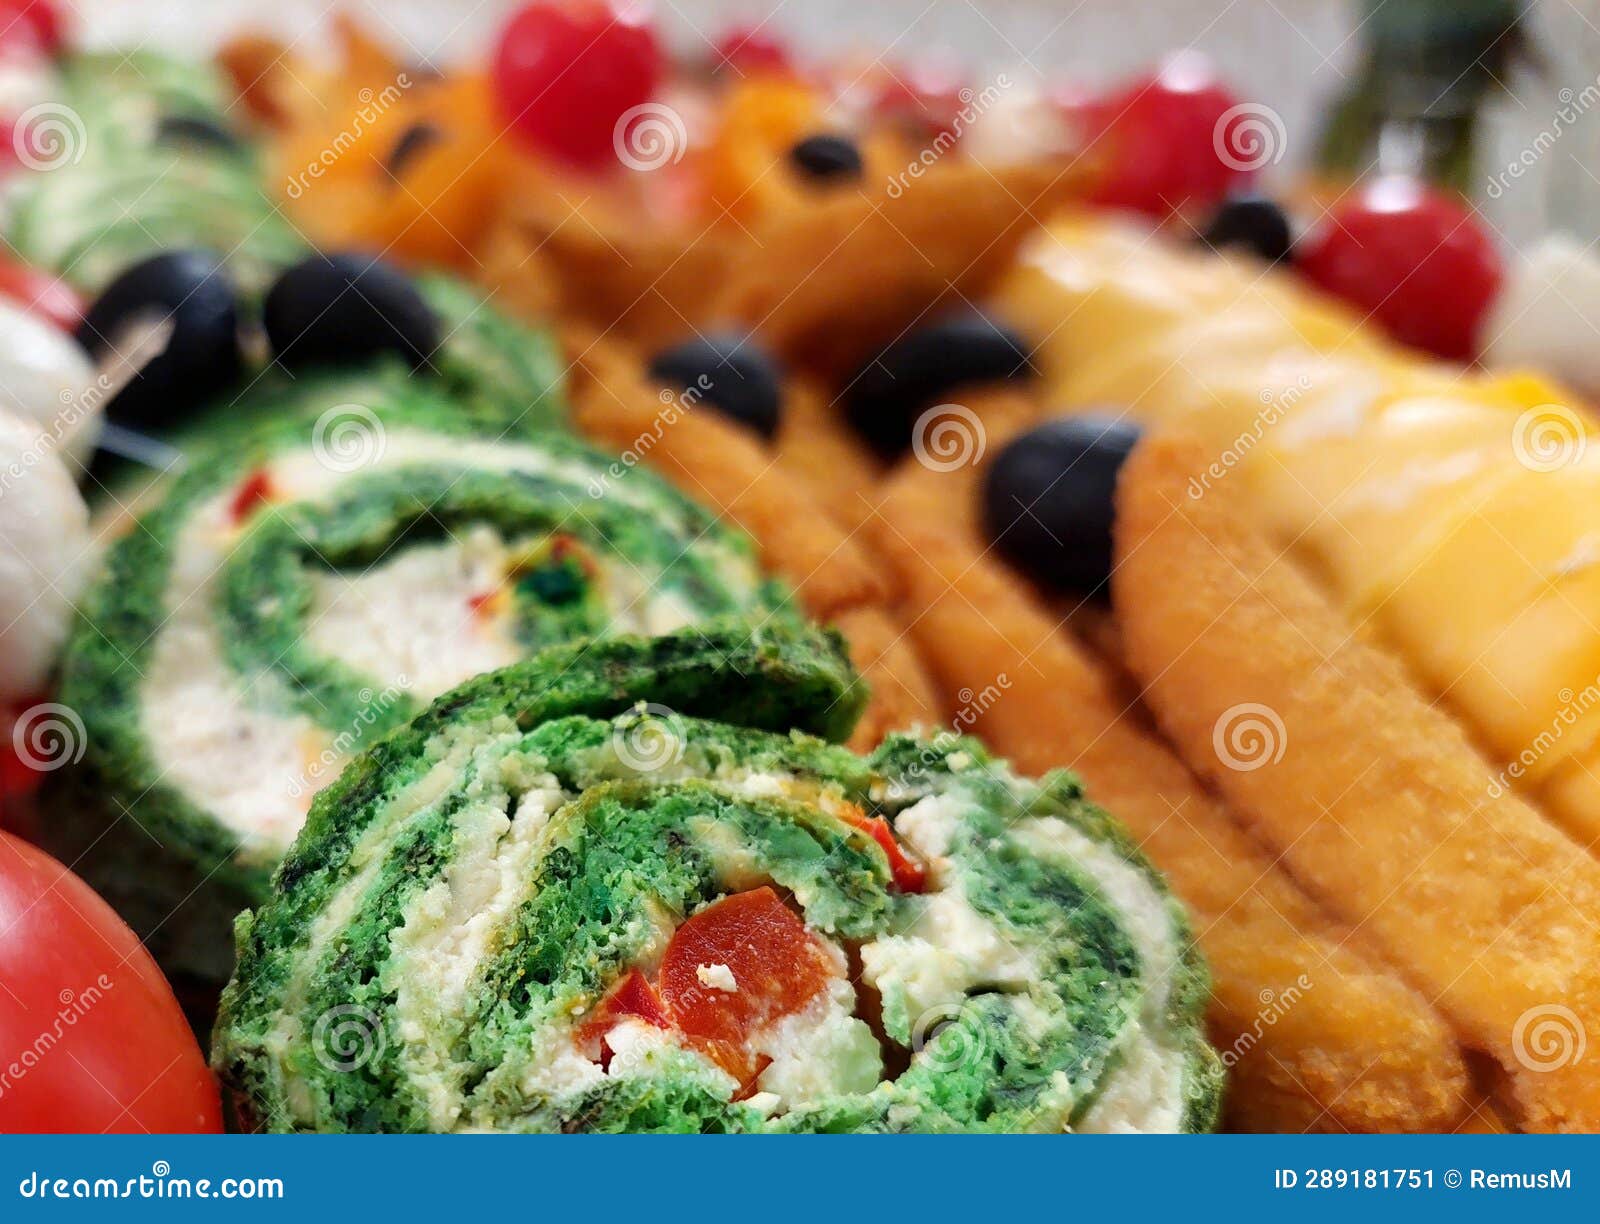 Street Food Vegan & Ecological Organic. Stock Image - Image of ...